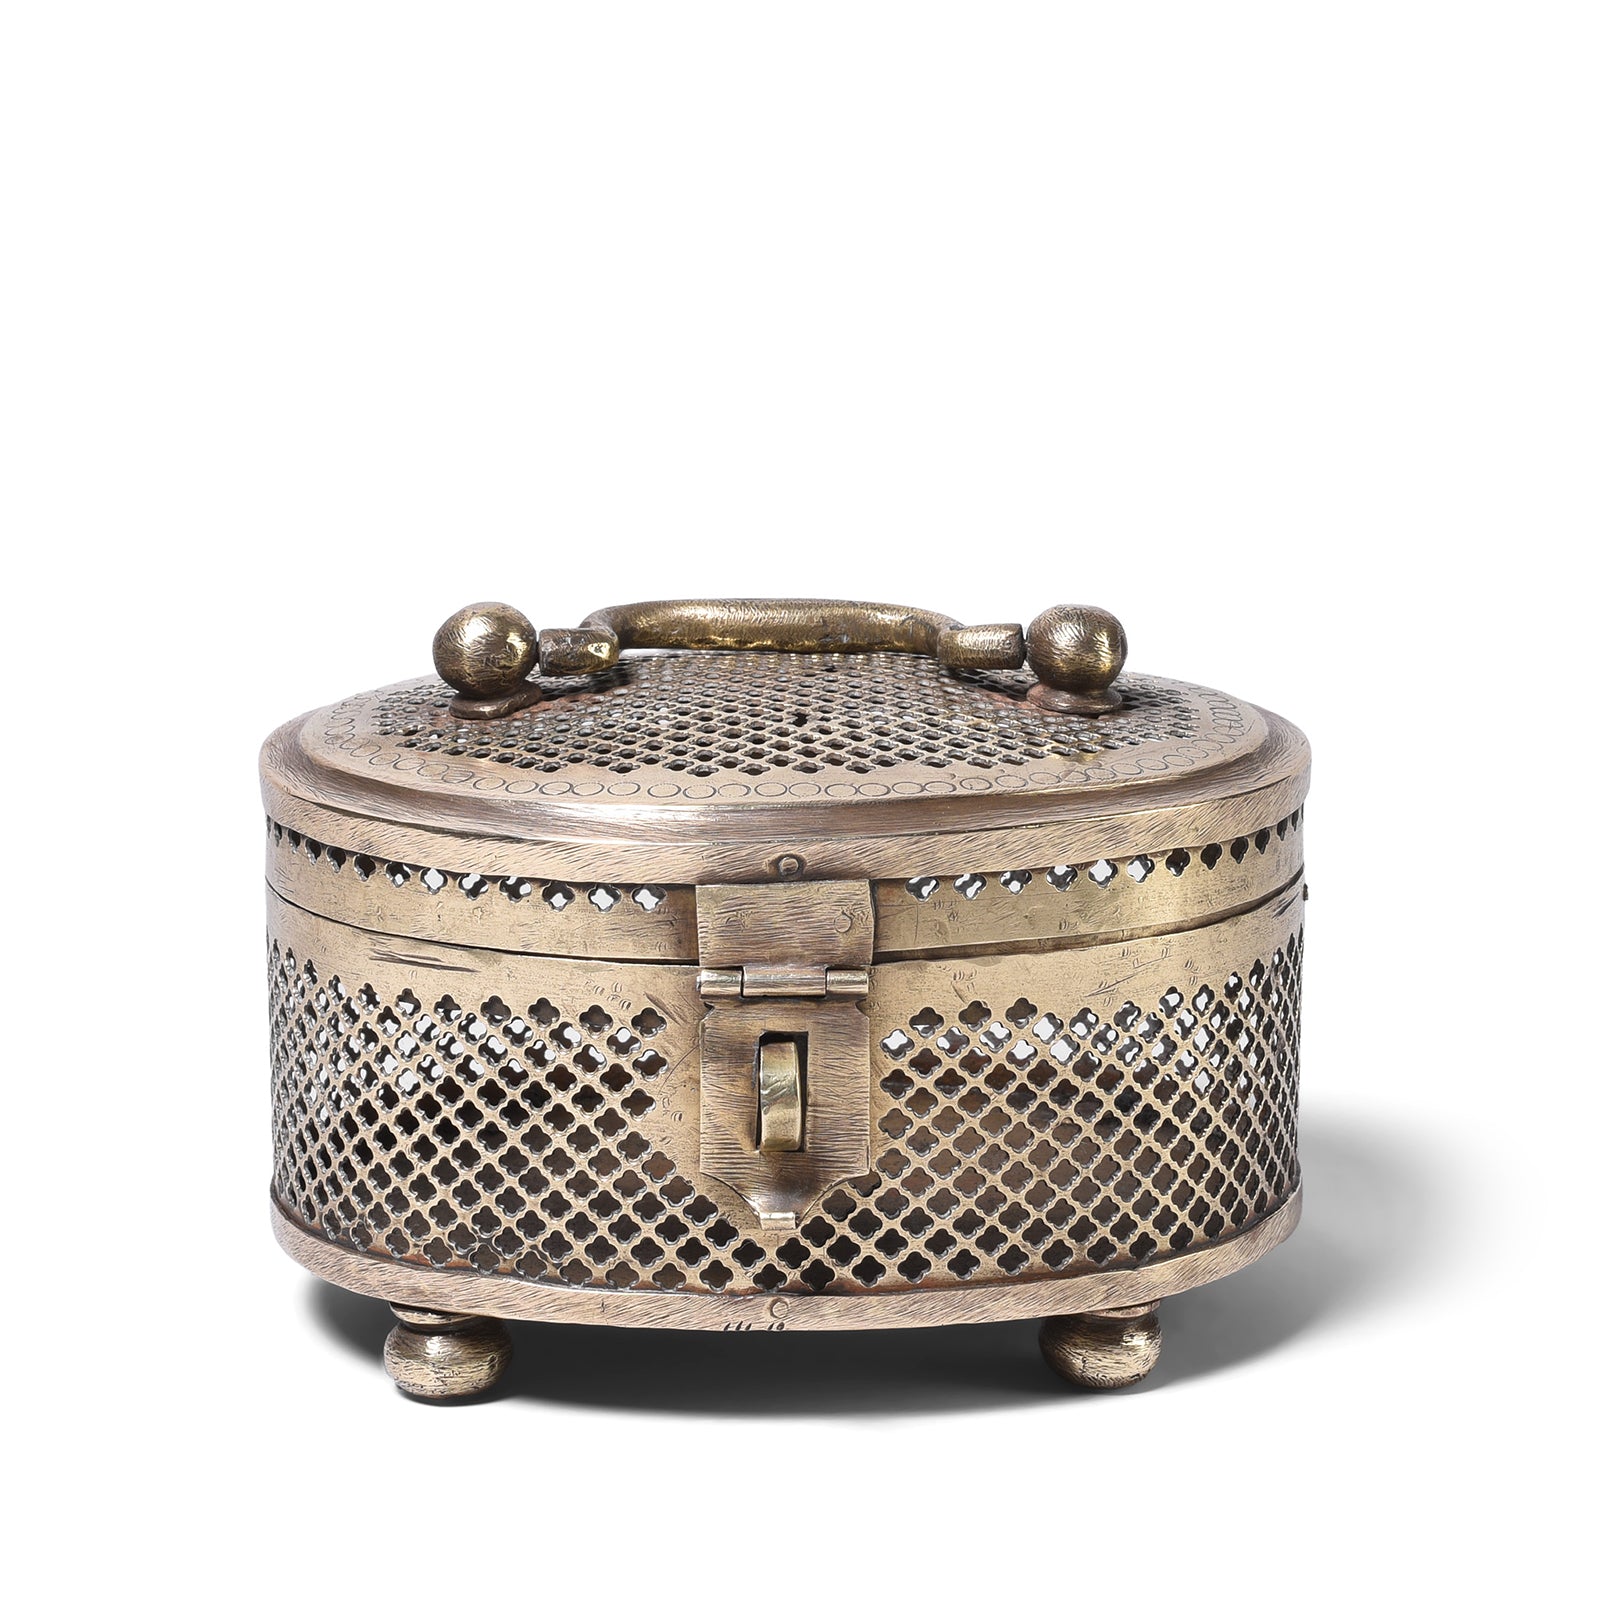 Antique Brass Jali Work Paan Box From Rajasthan | Indigo Antiques